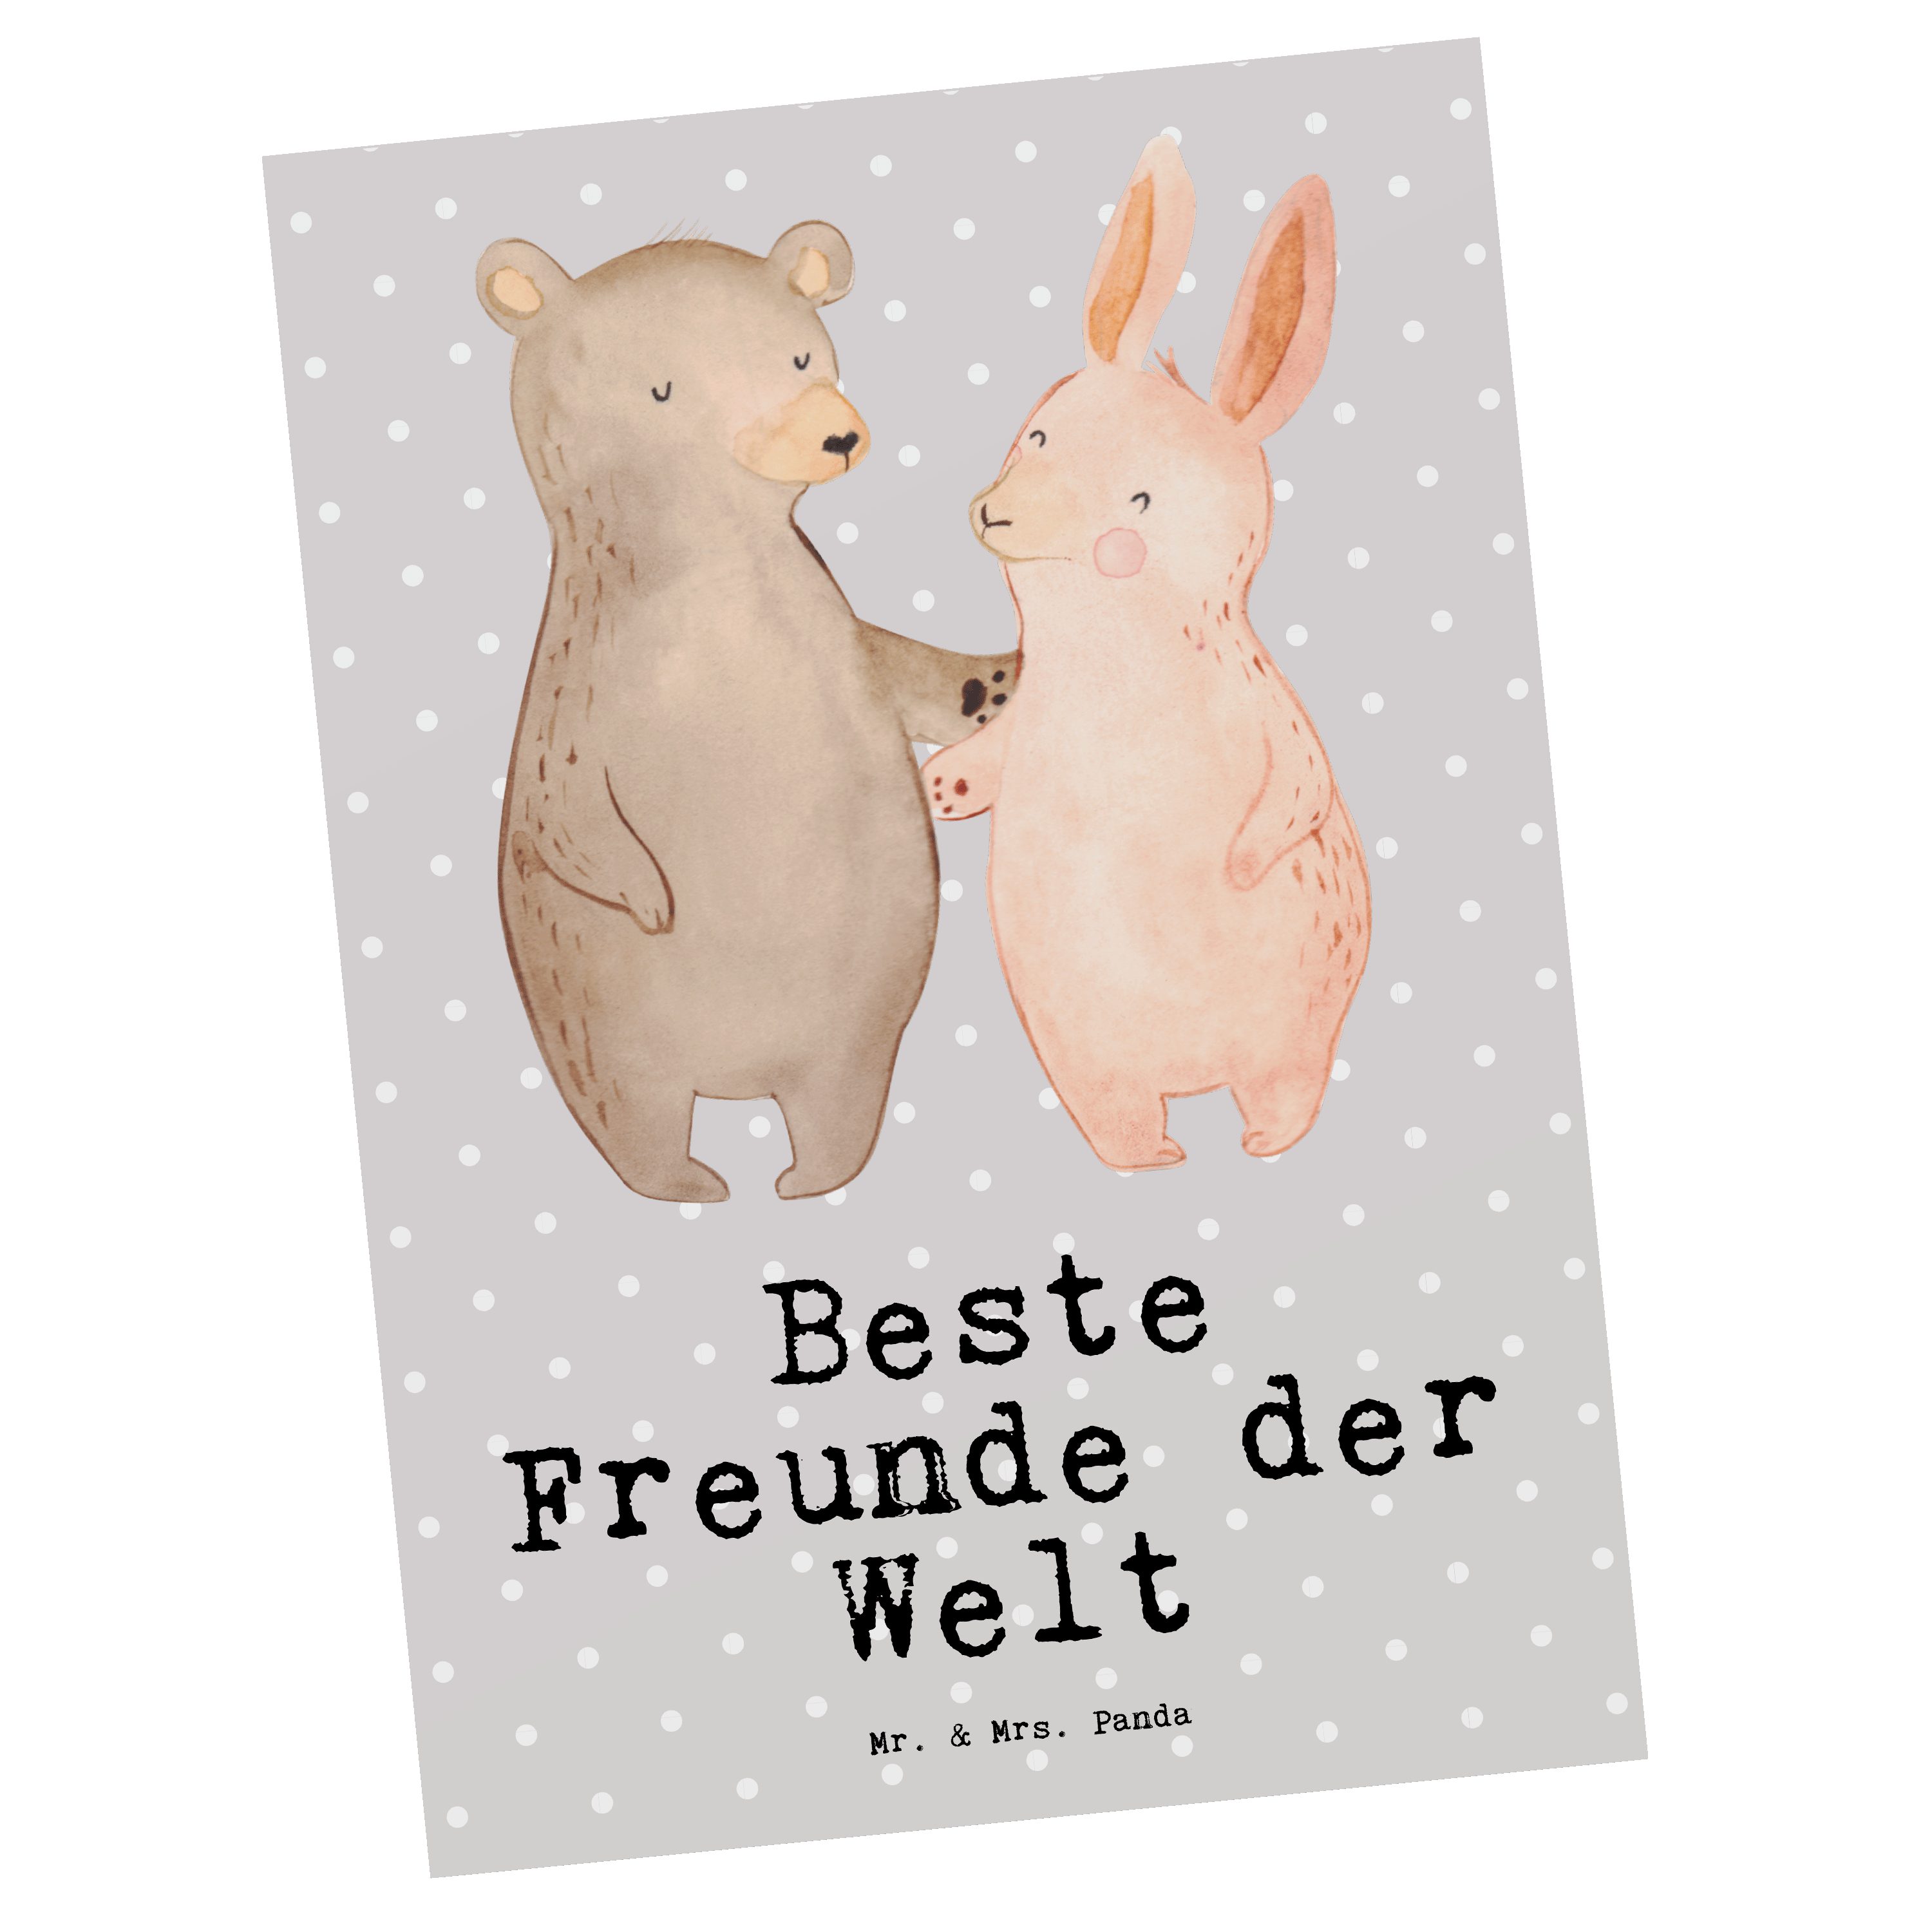 Mr. & Hase der Postkarte Freunde Beste - Geschenk, Grau Panda Mrs. friends Pastell - best Welt